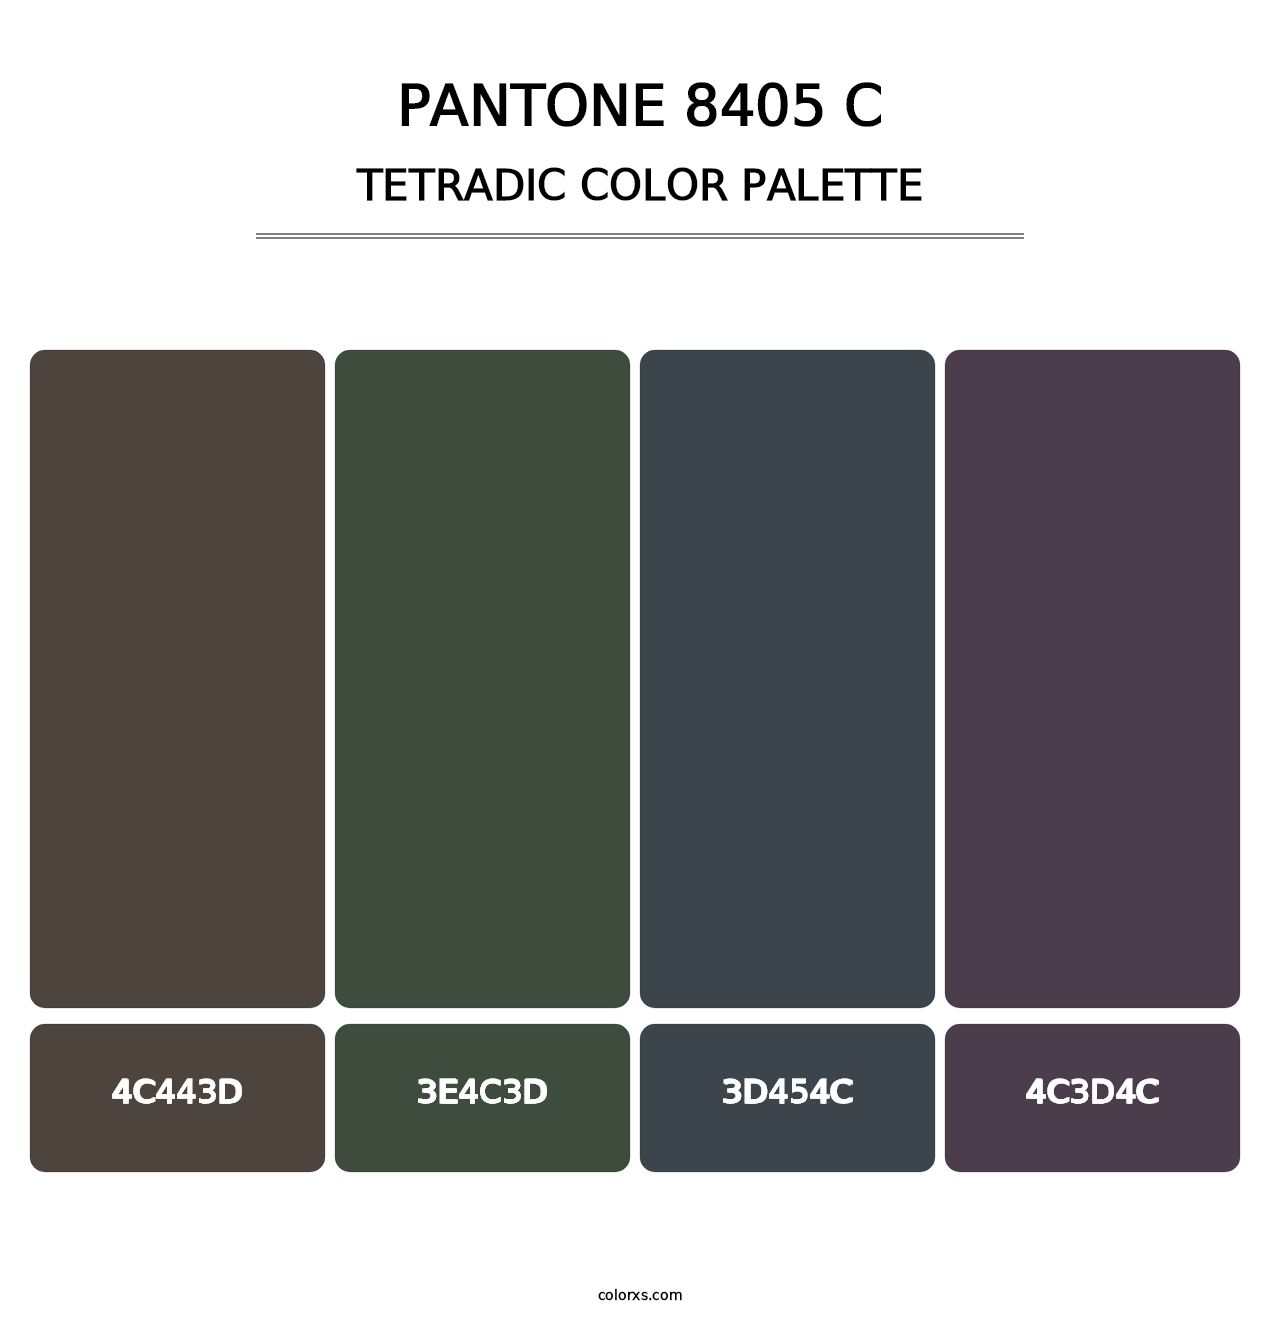 PANTONE 8405 C - Tetradic Color Palette